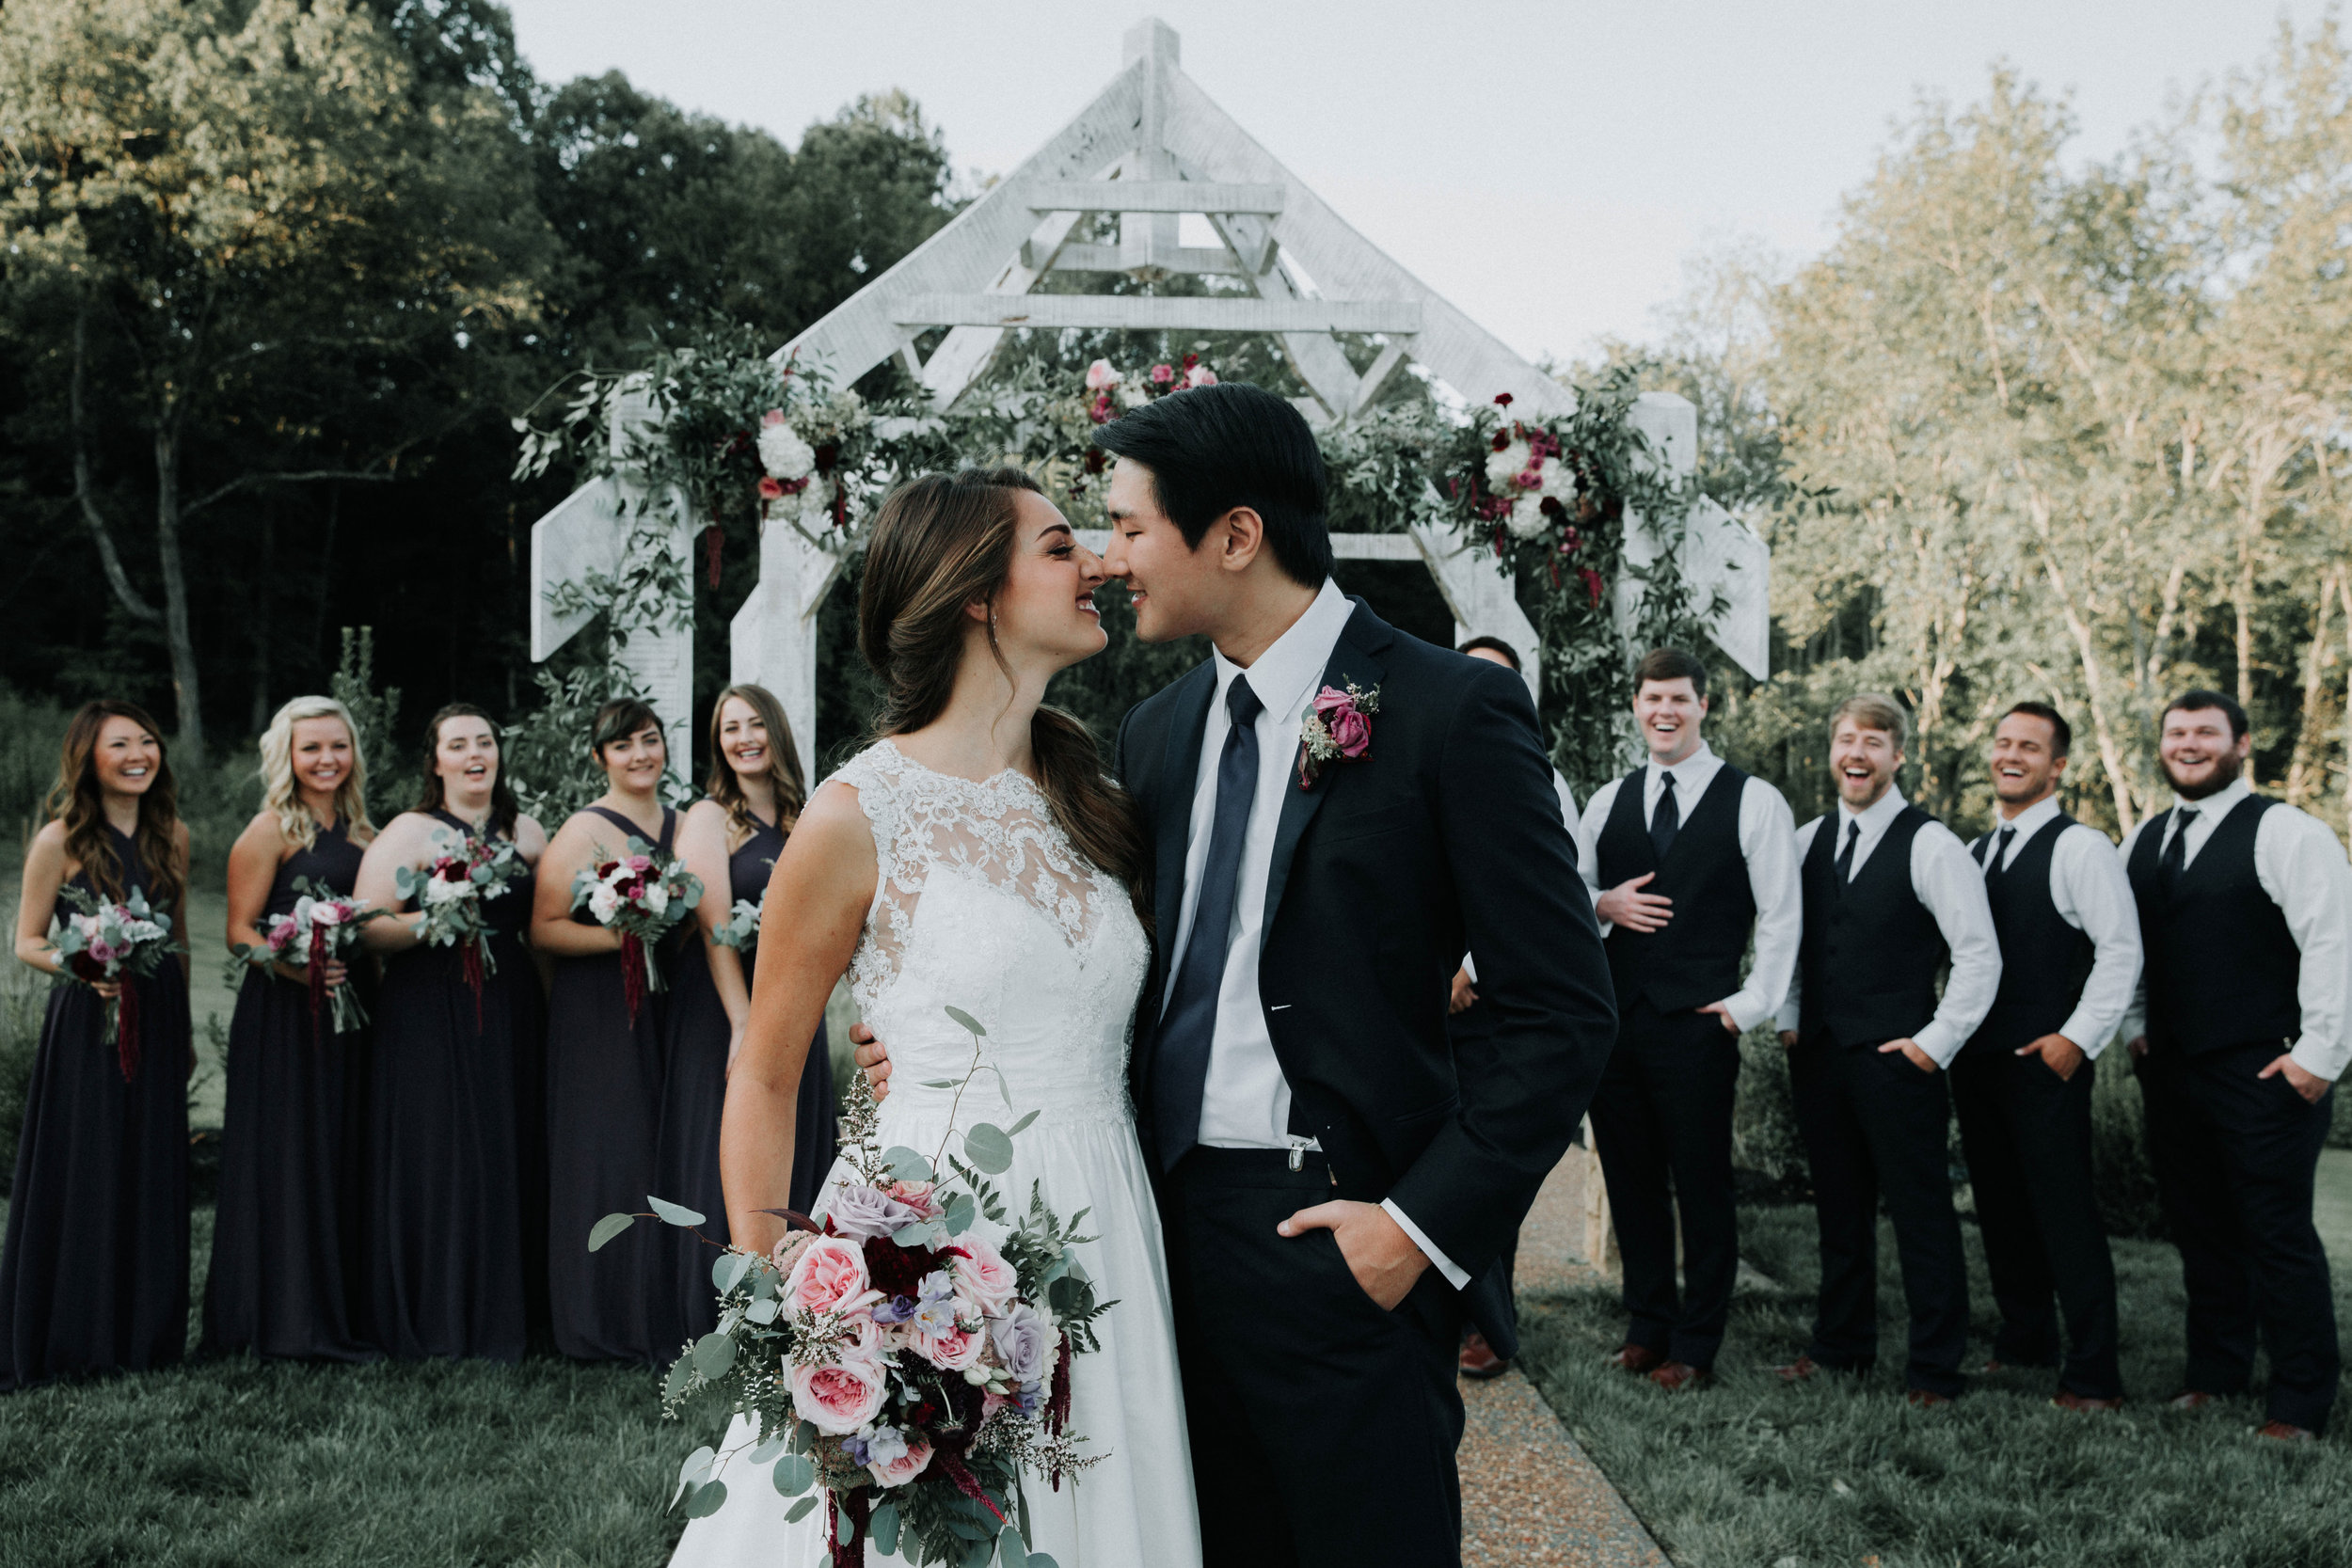 Gorgeous Barn Wedding Decor - Athens, Tennessee Barn Wedding -- The Overwhelmed Bride Wedding Blog